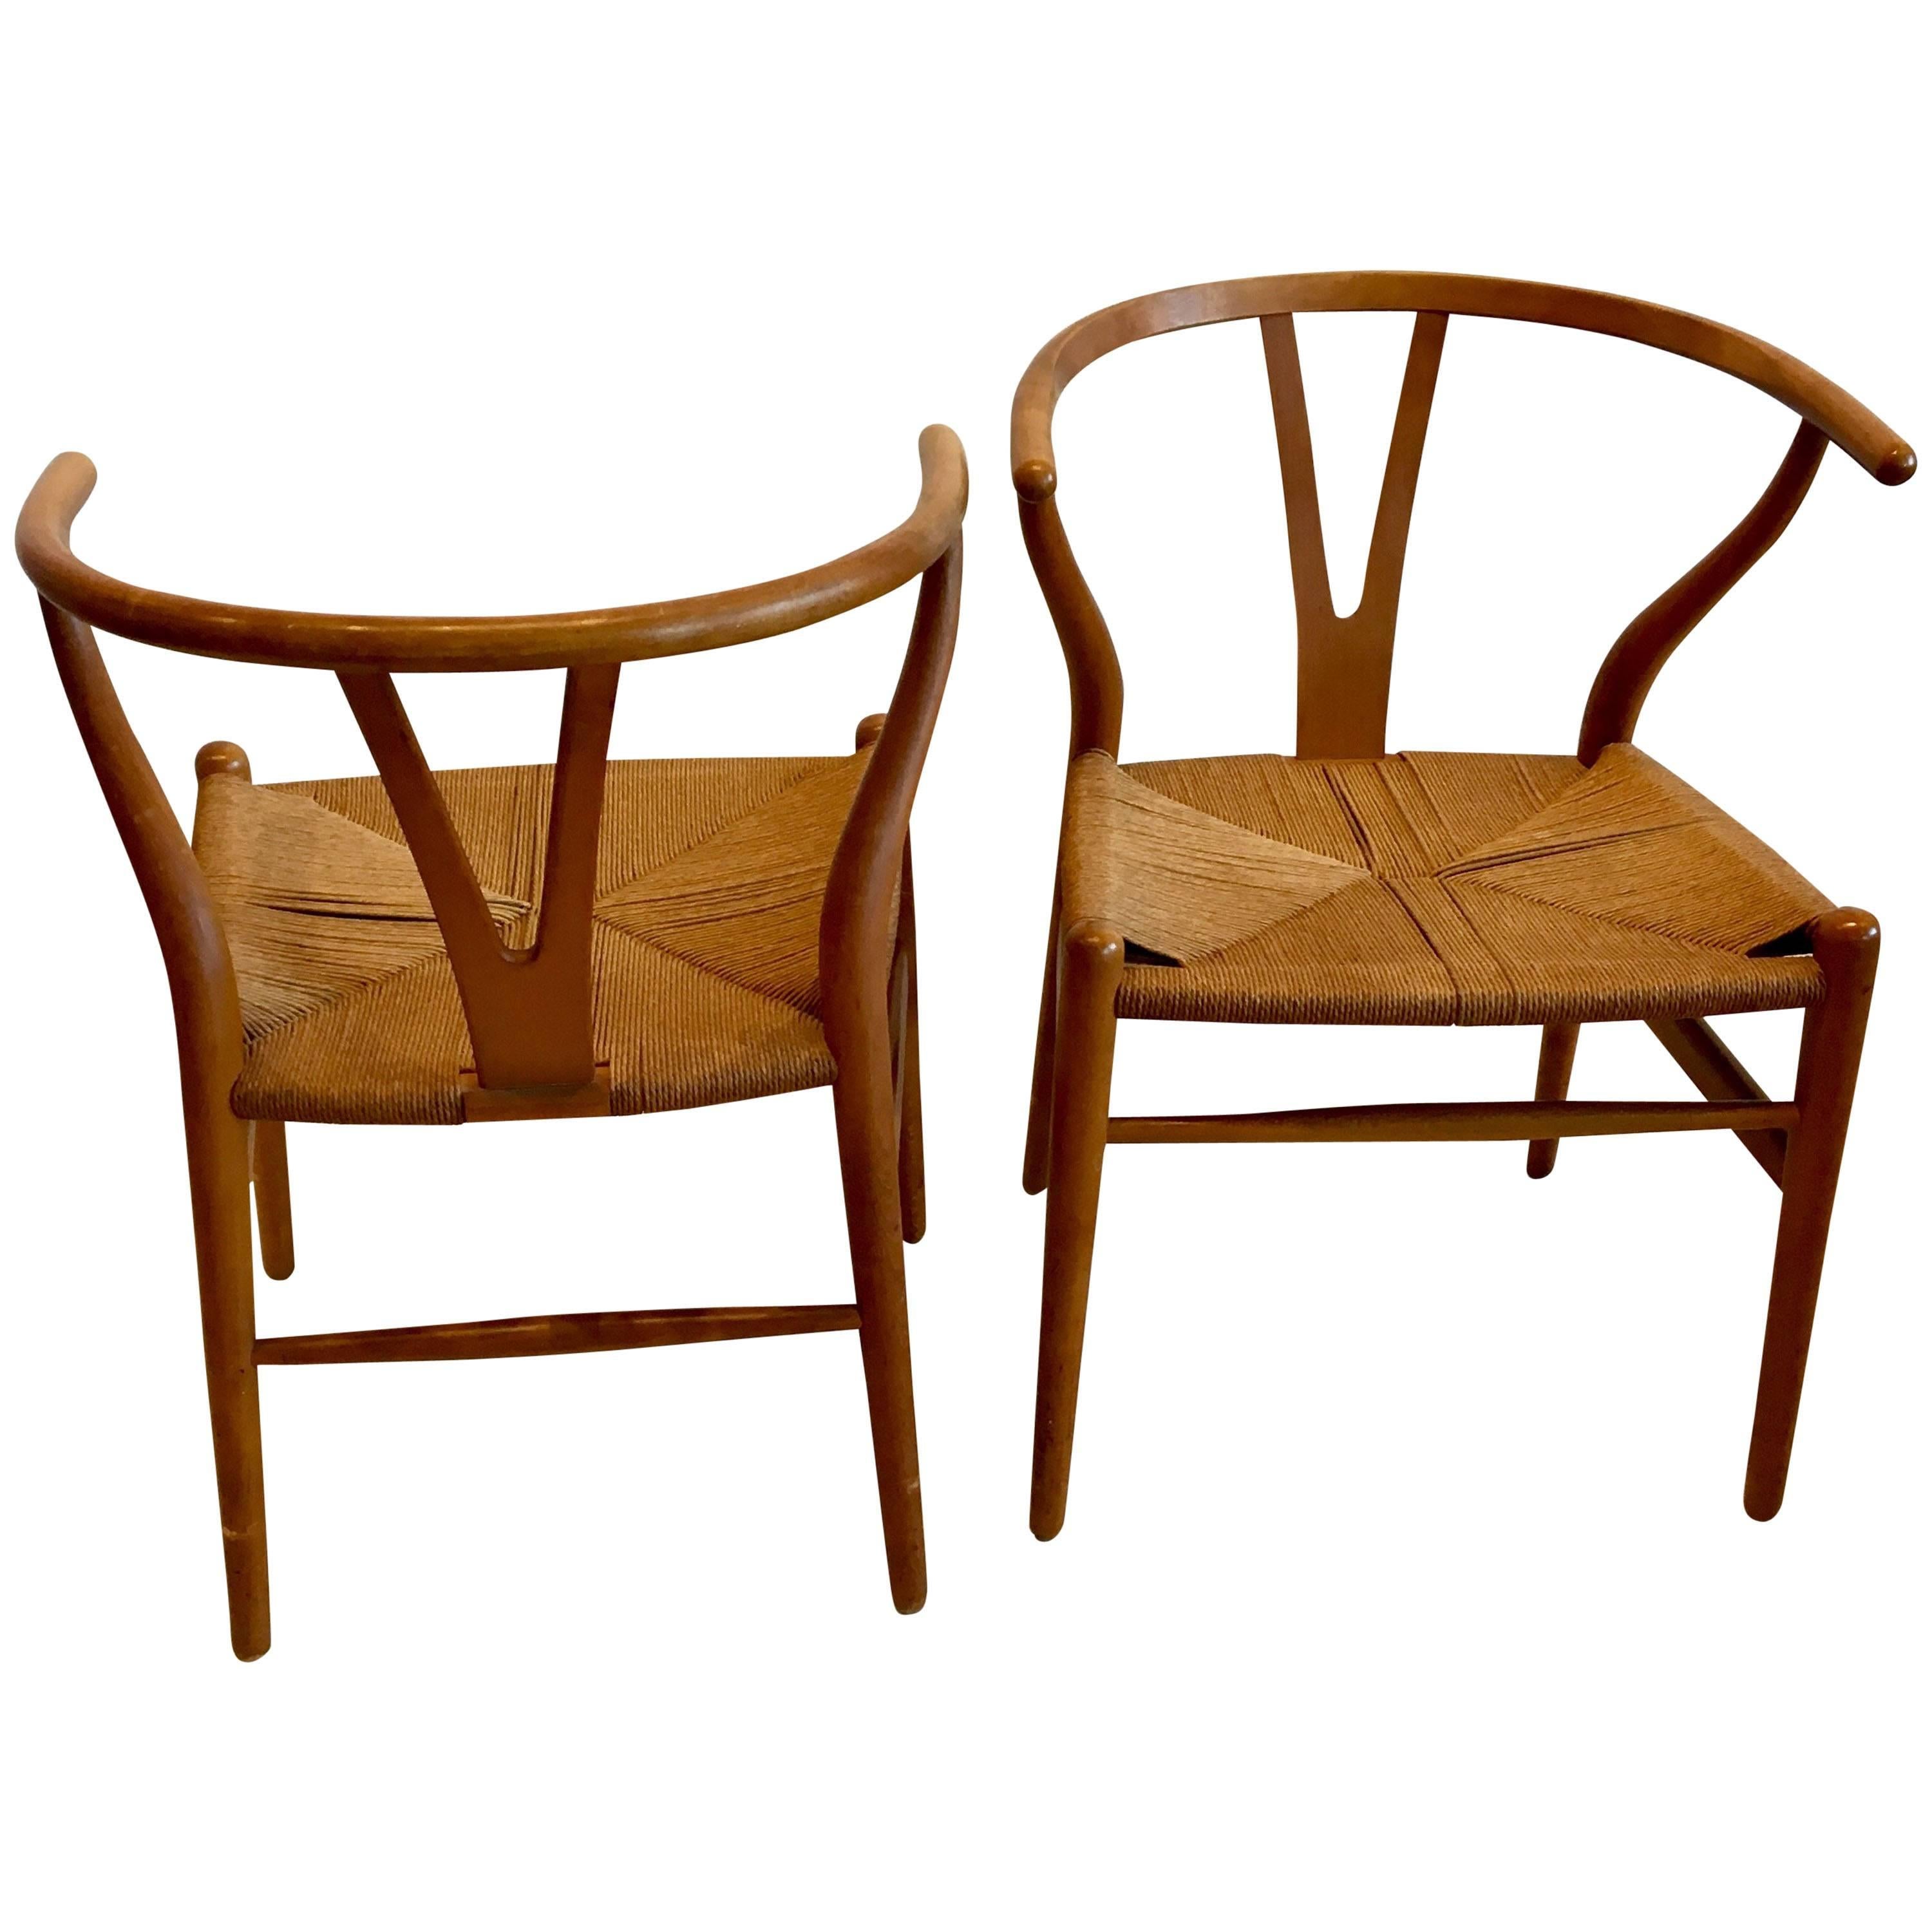 Pair of Danish Modern Hans Wegner Wishbone Chairs by Carl Hansen & Son